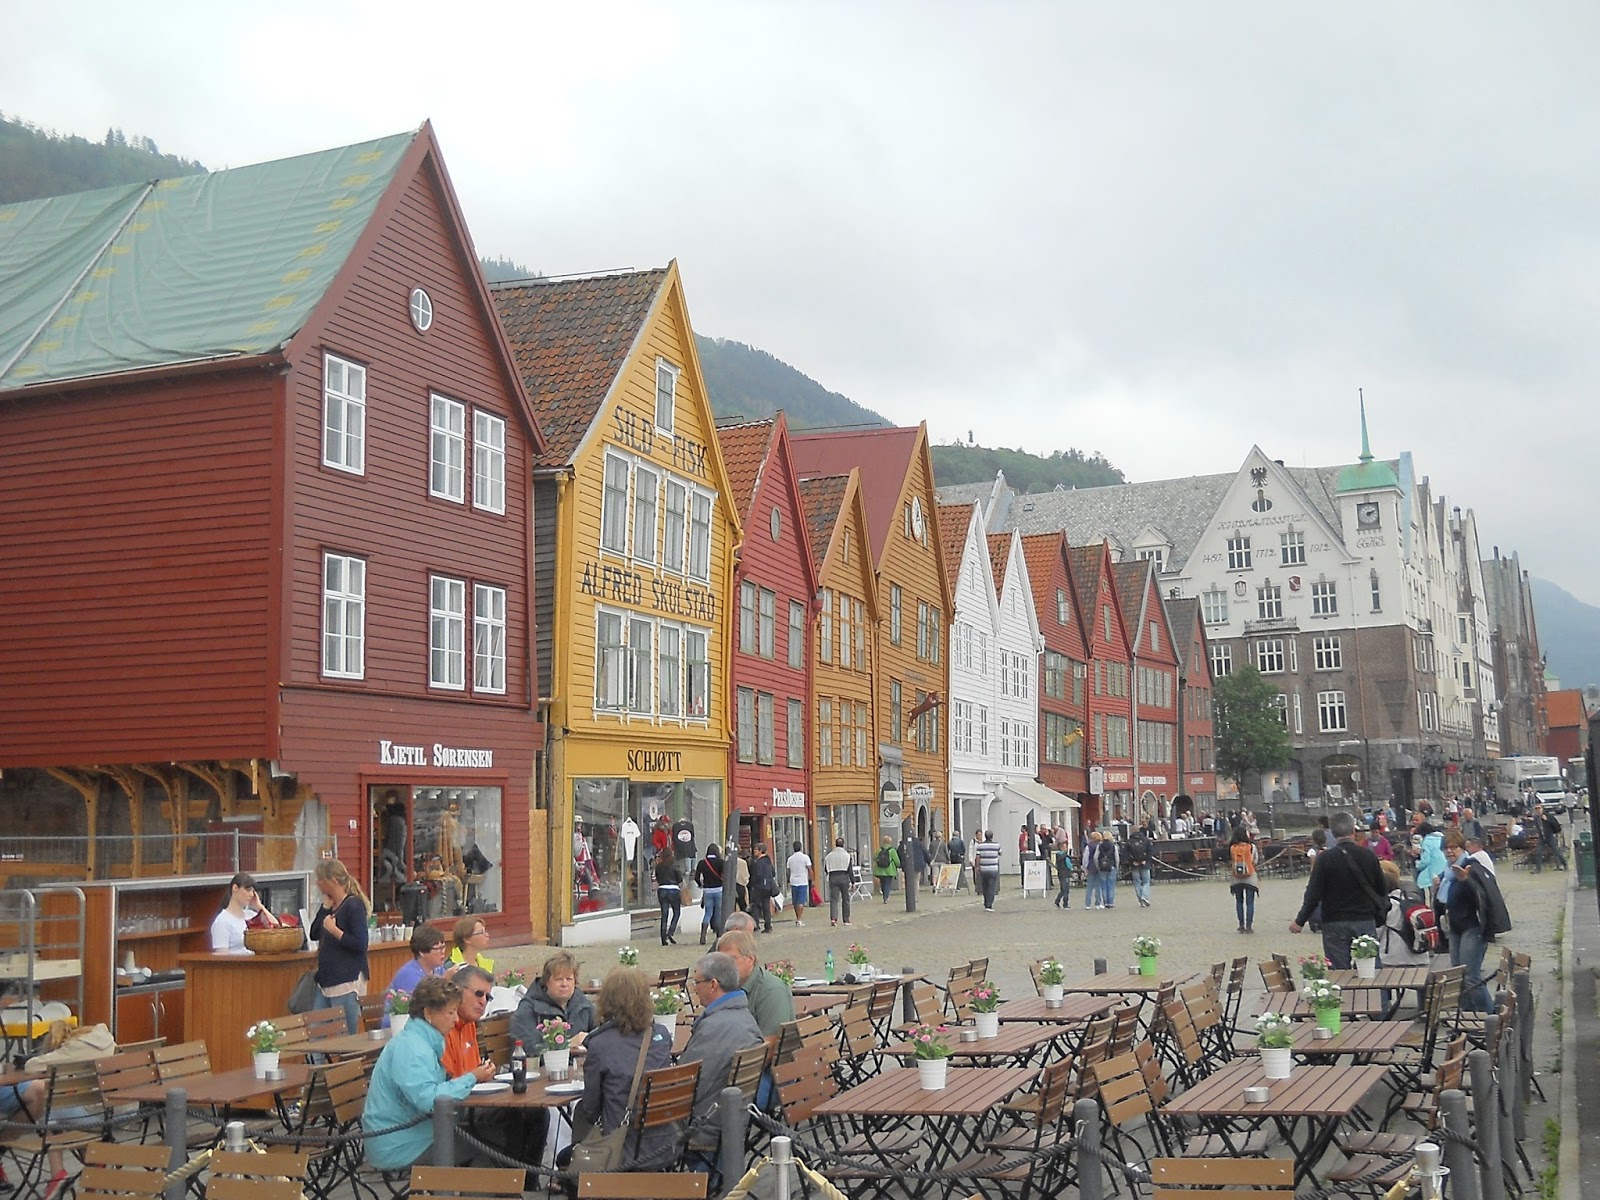 Linda Acaster: Research: Norway 3 - Bergen & the Hanseatic League